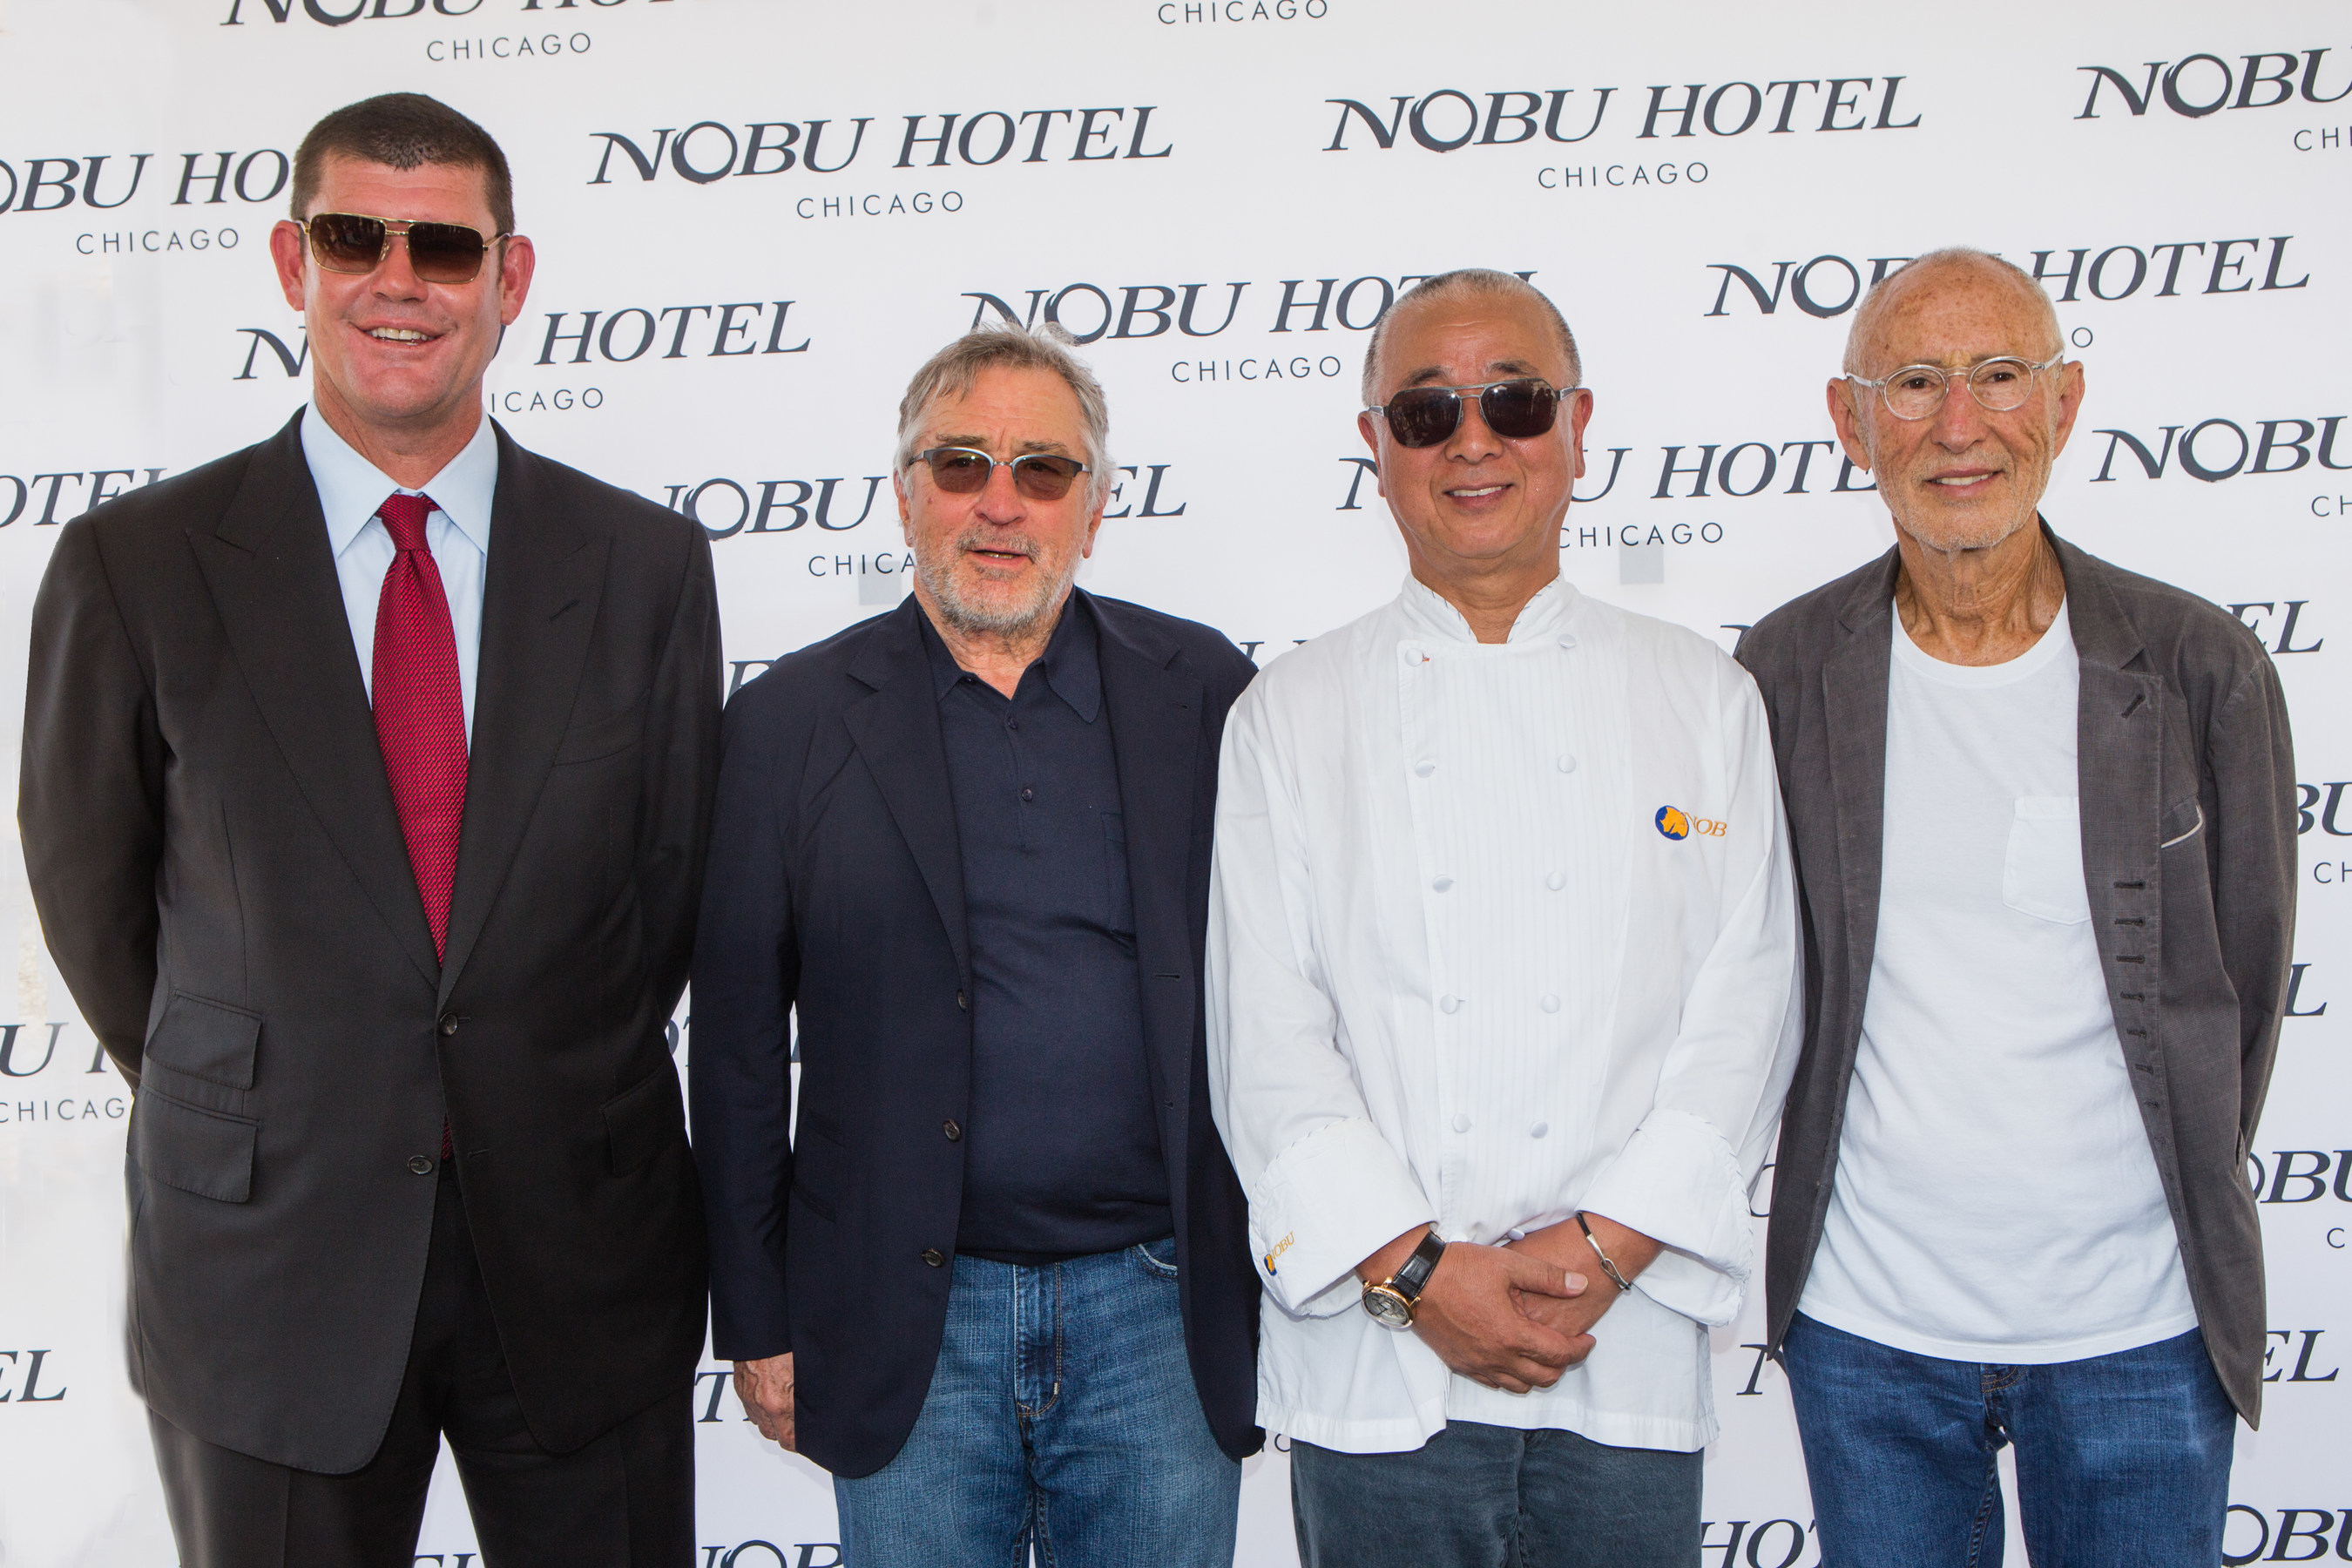 James Packer, Robert De Niro, Chef Nobu Matsuhisa, and Meir Teper break ground on Nobu Hotel Chicago. Photo Credit: Francis Son Photography